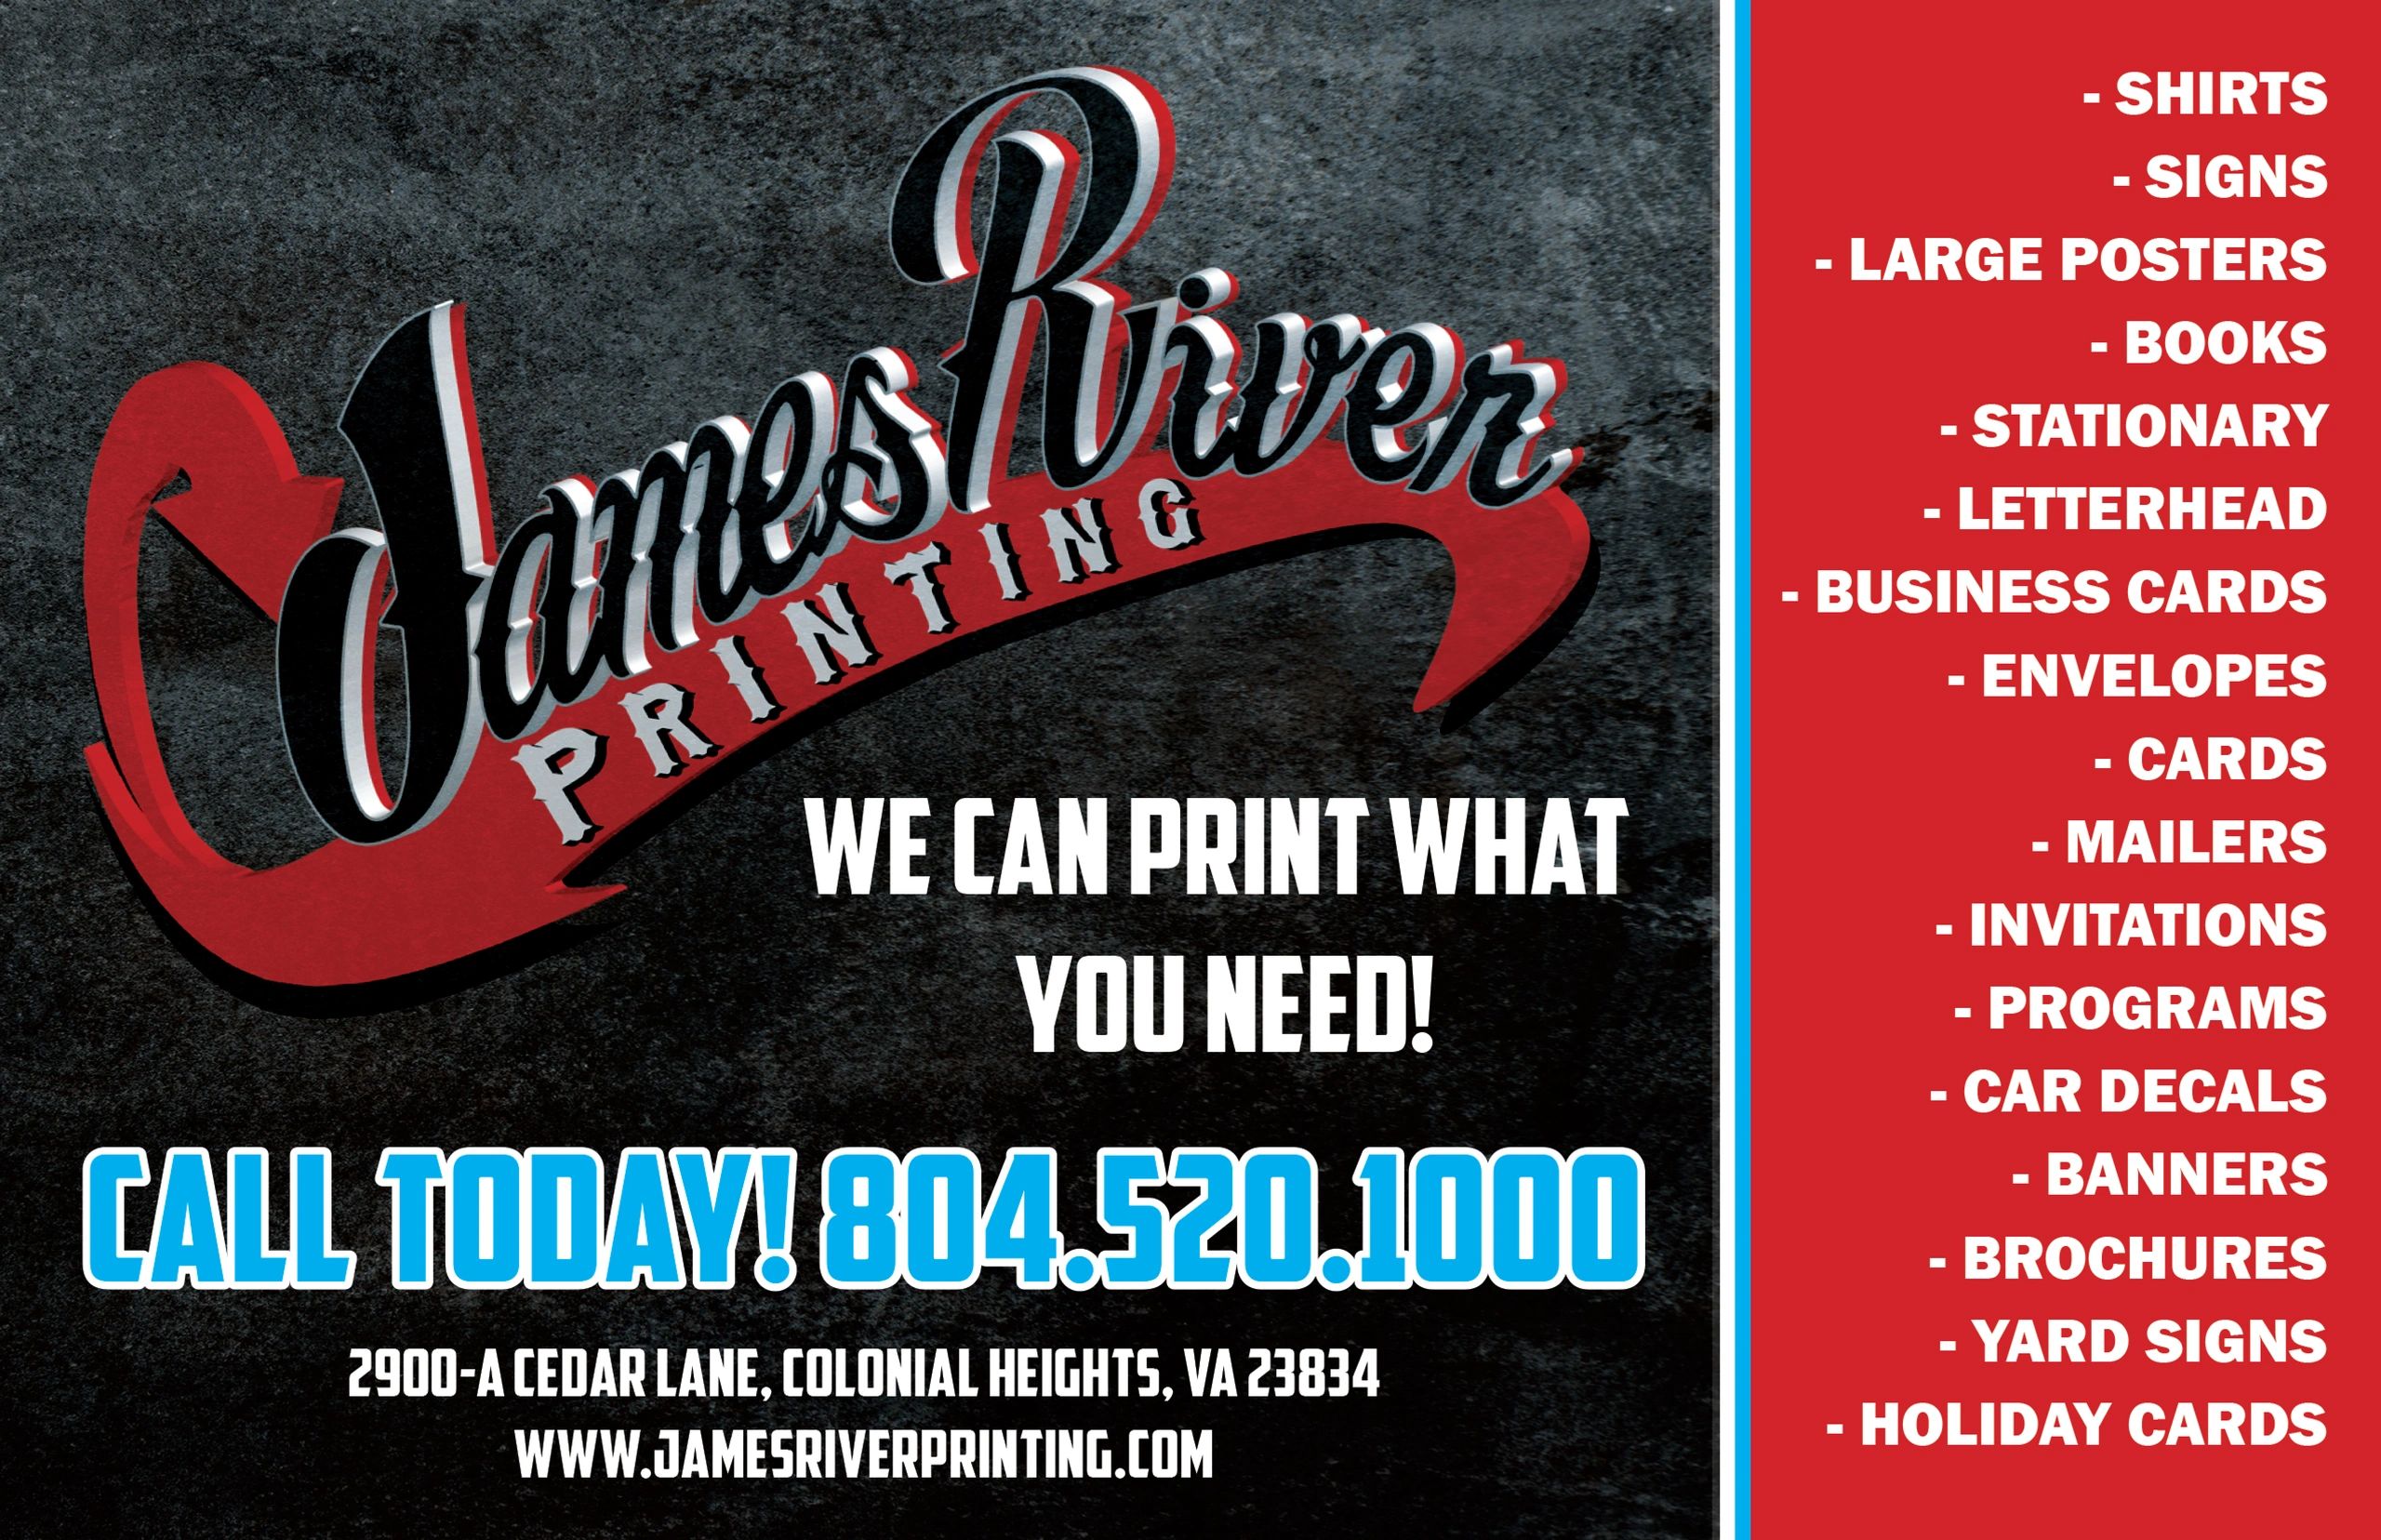 James River Printing Inc